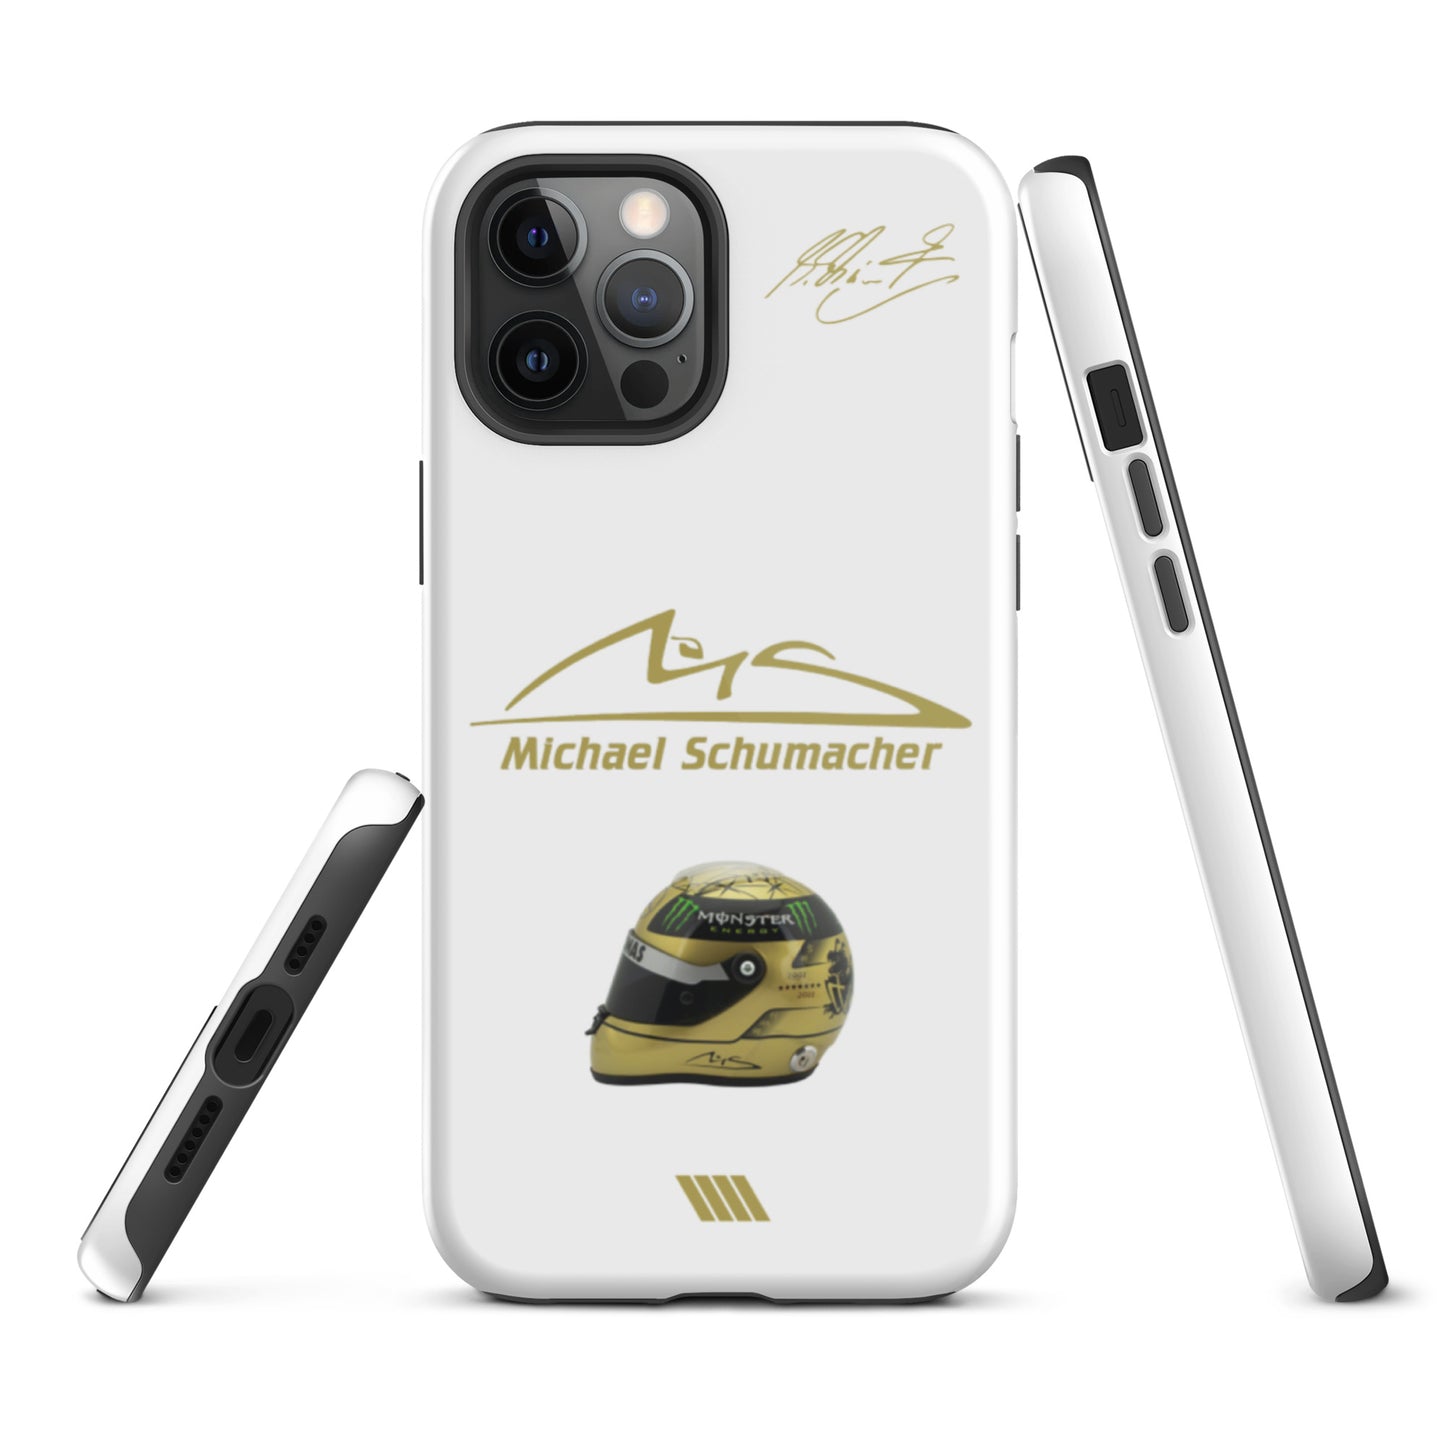 Michael Schumacher Tough iPhone case